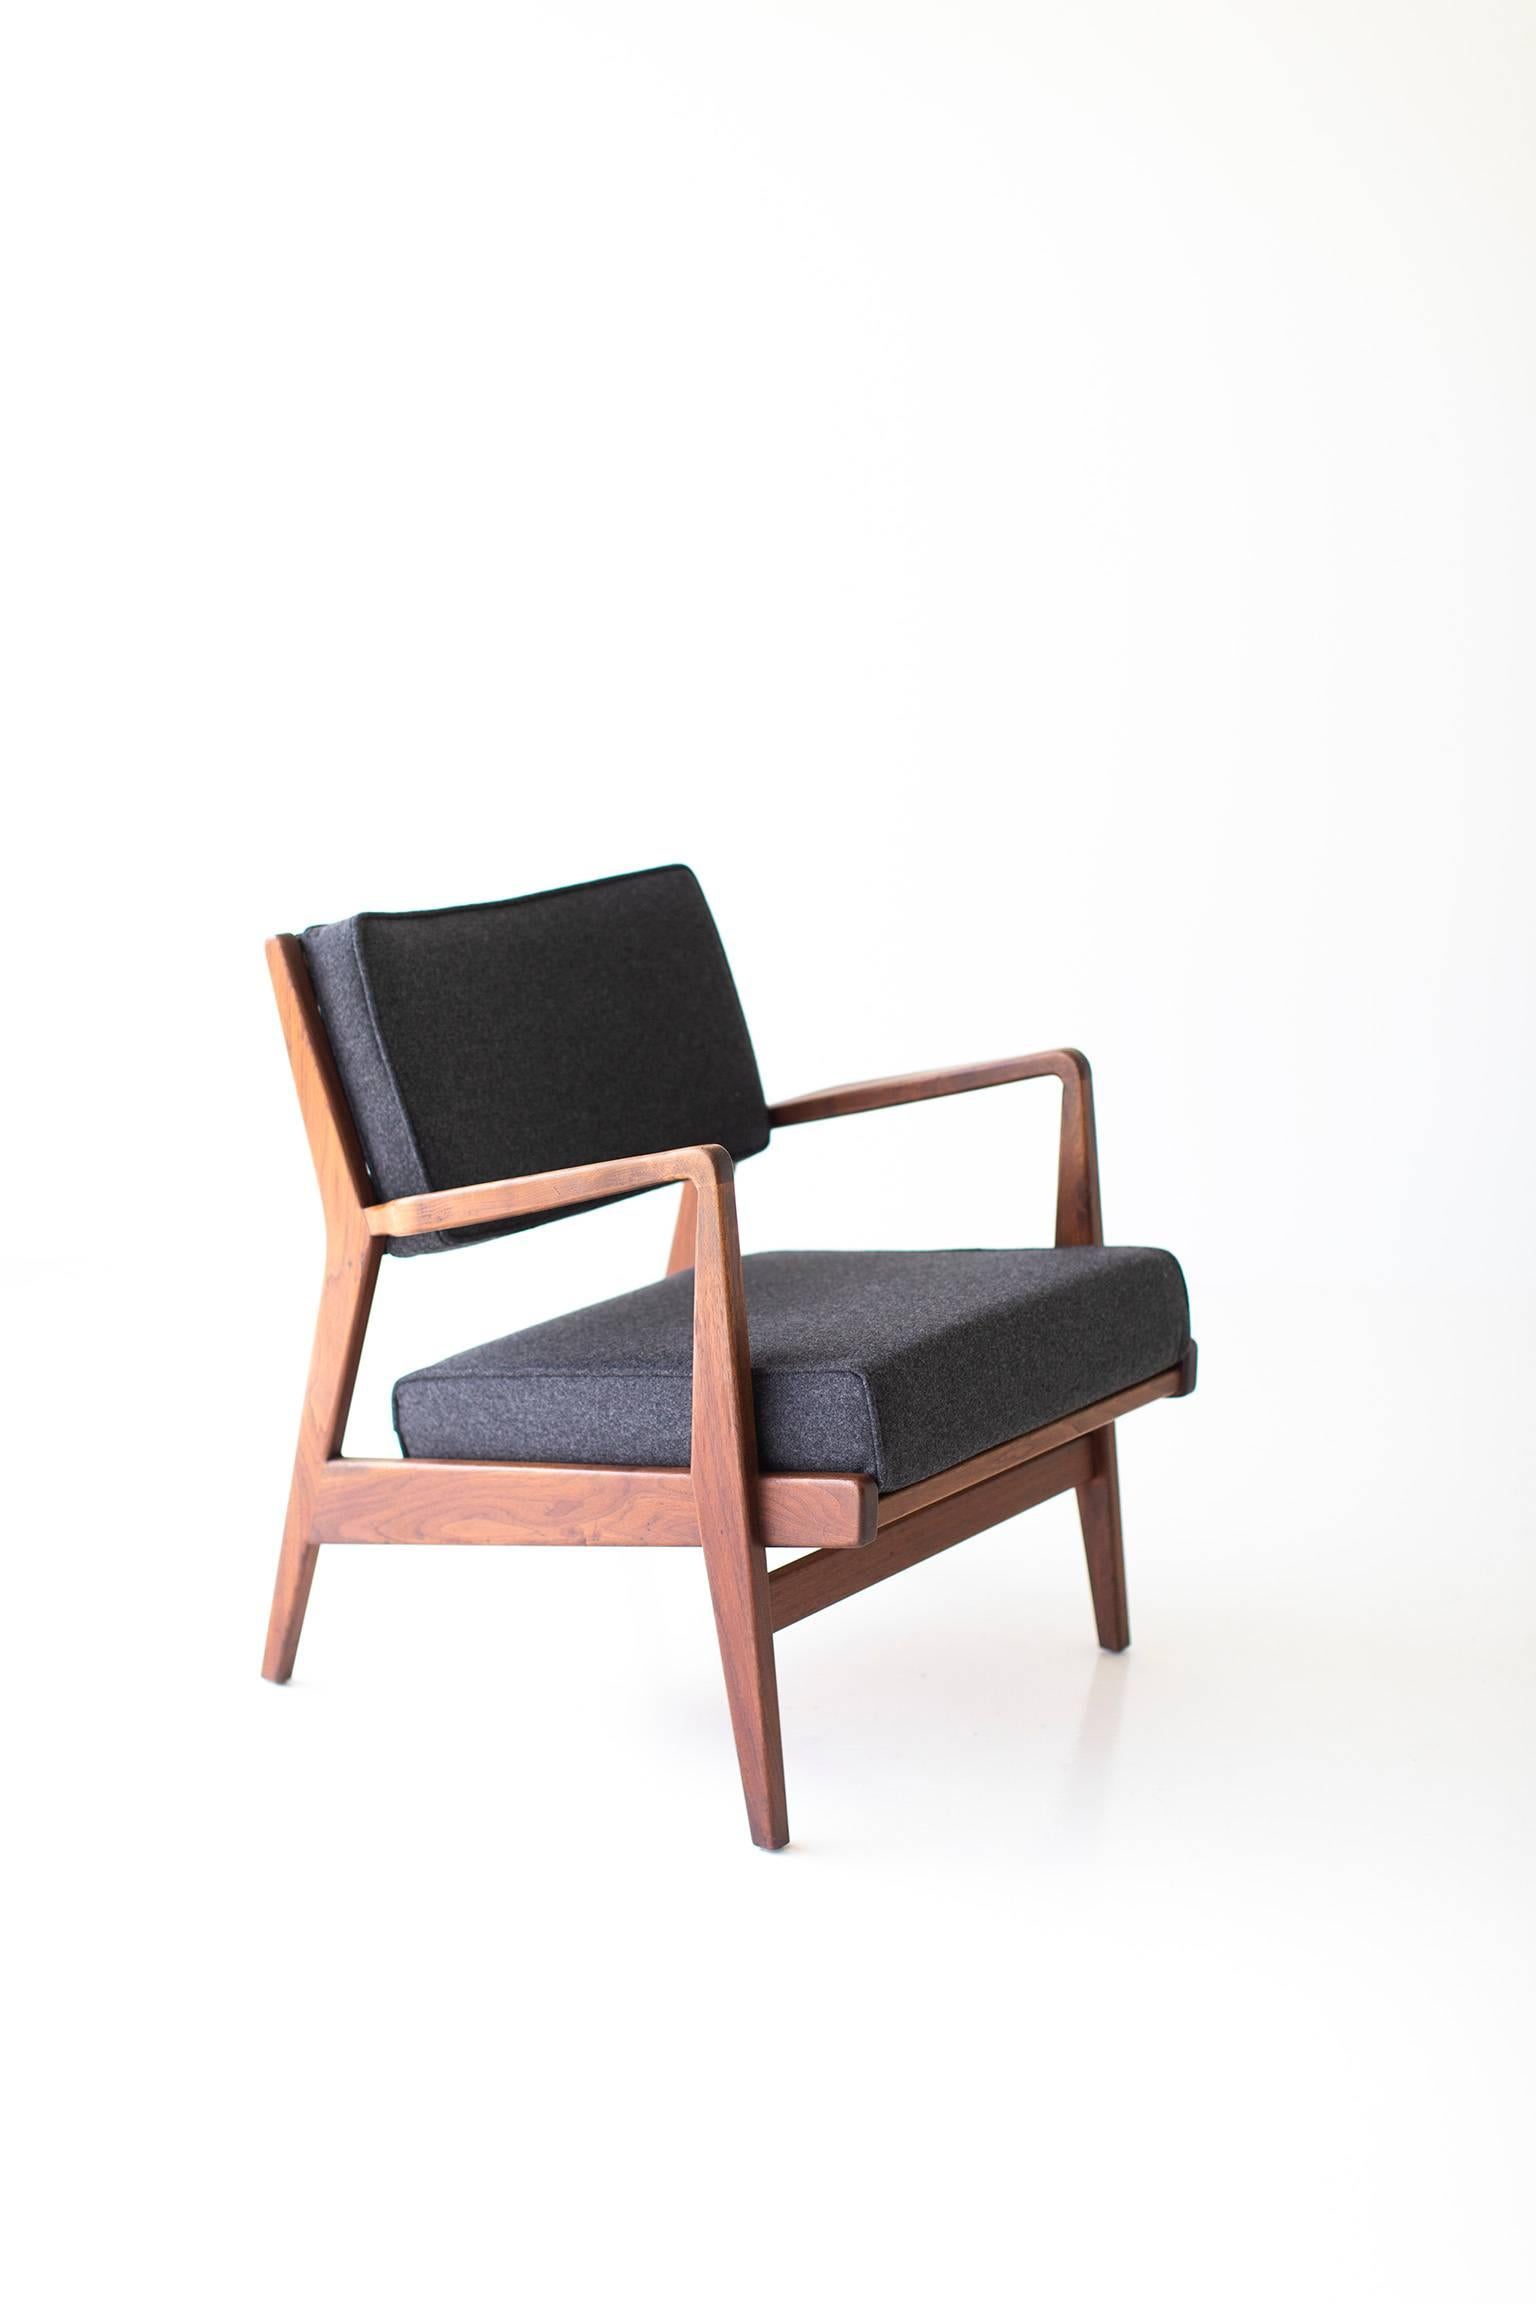 Wool Jens Risom Lounge Chair for Risom Design Inc.